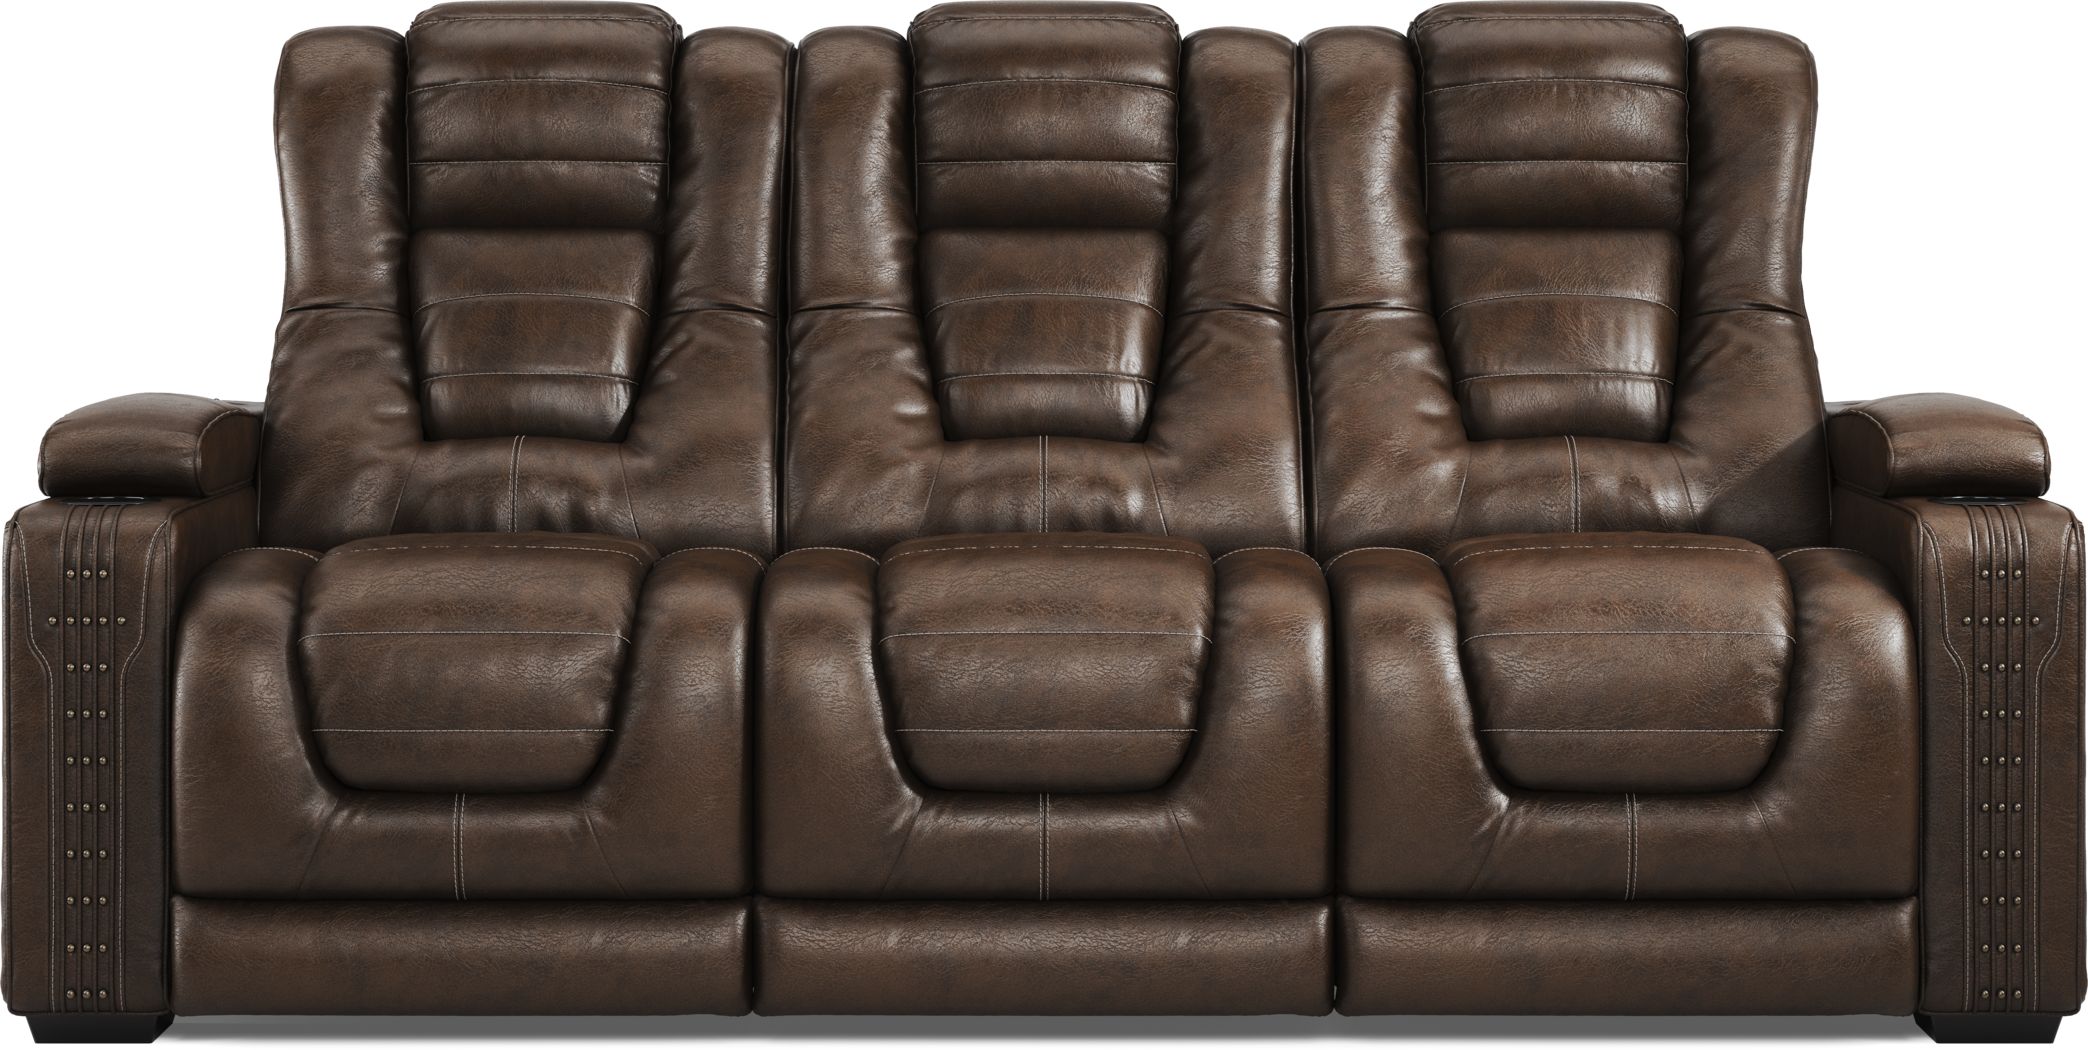 eric church power reclining sofa leather sofa reviews